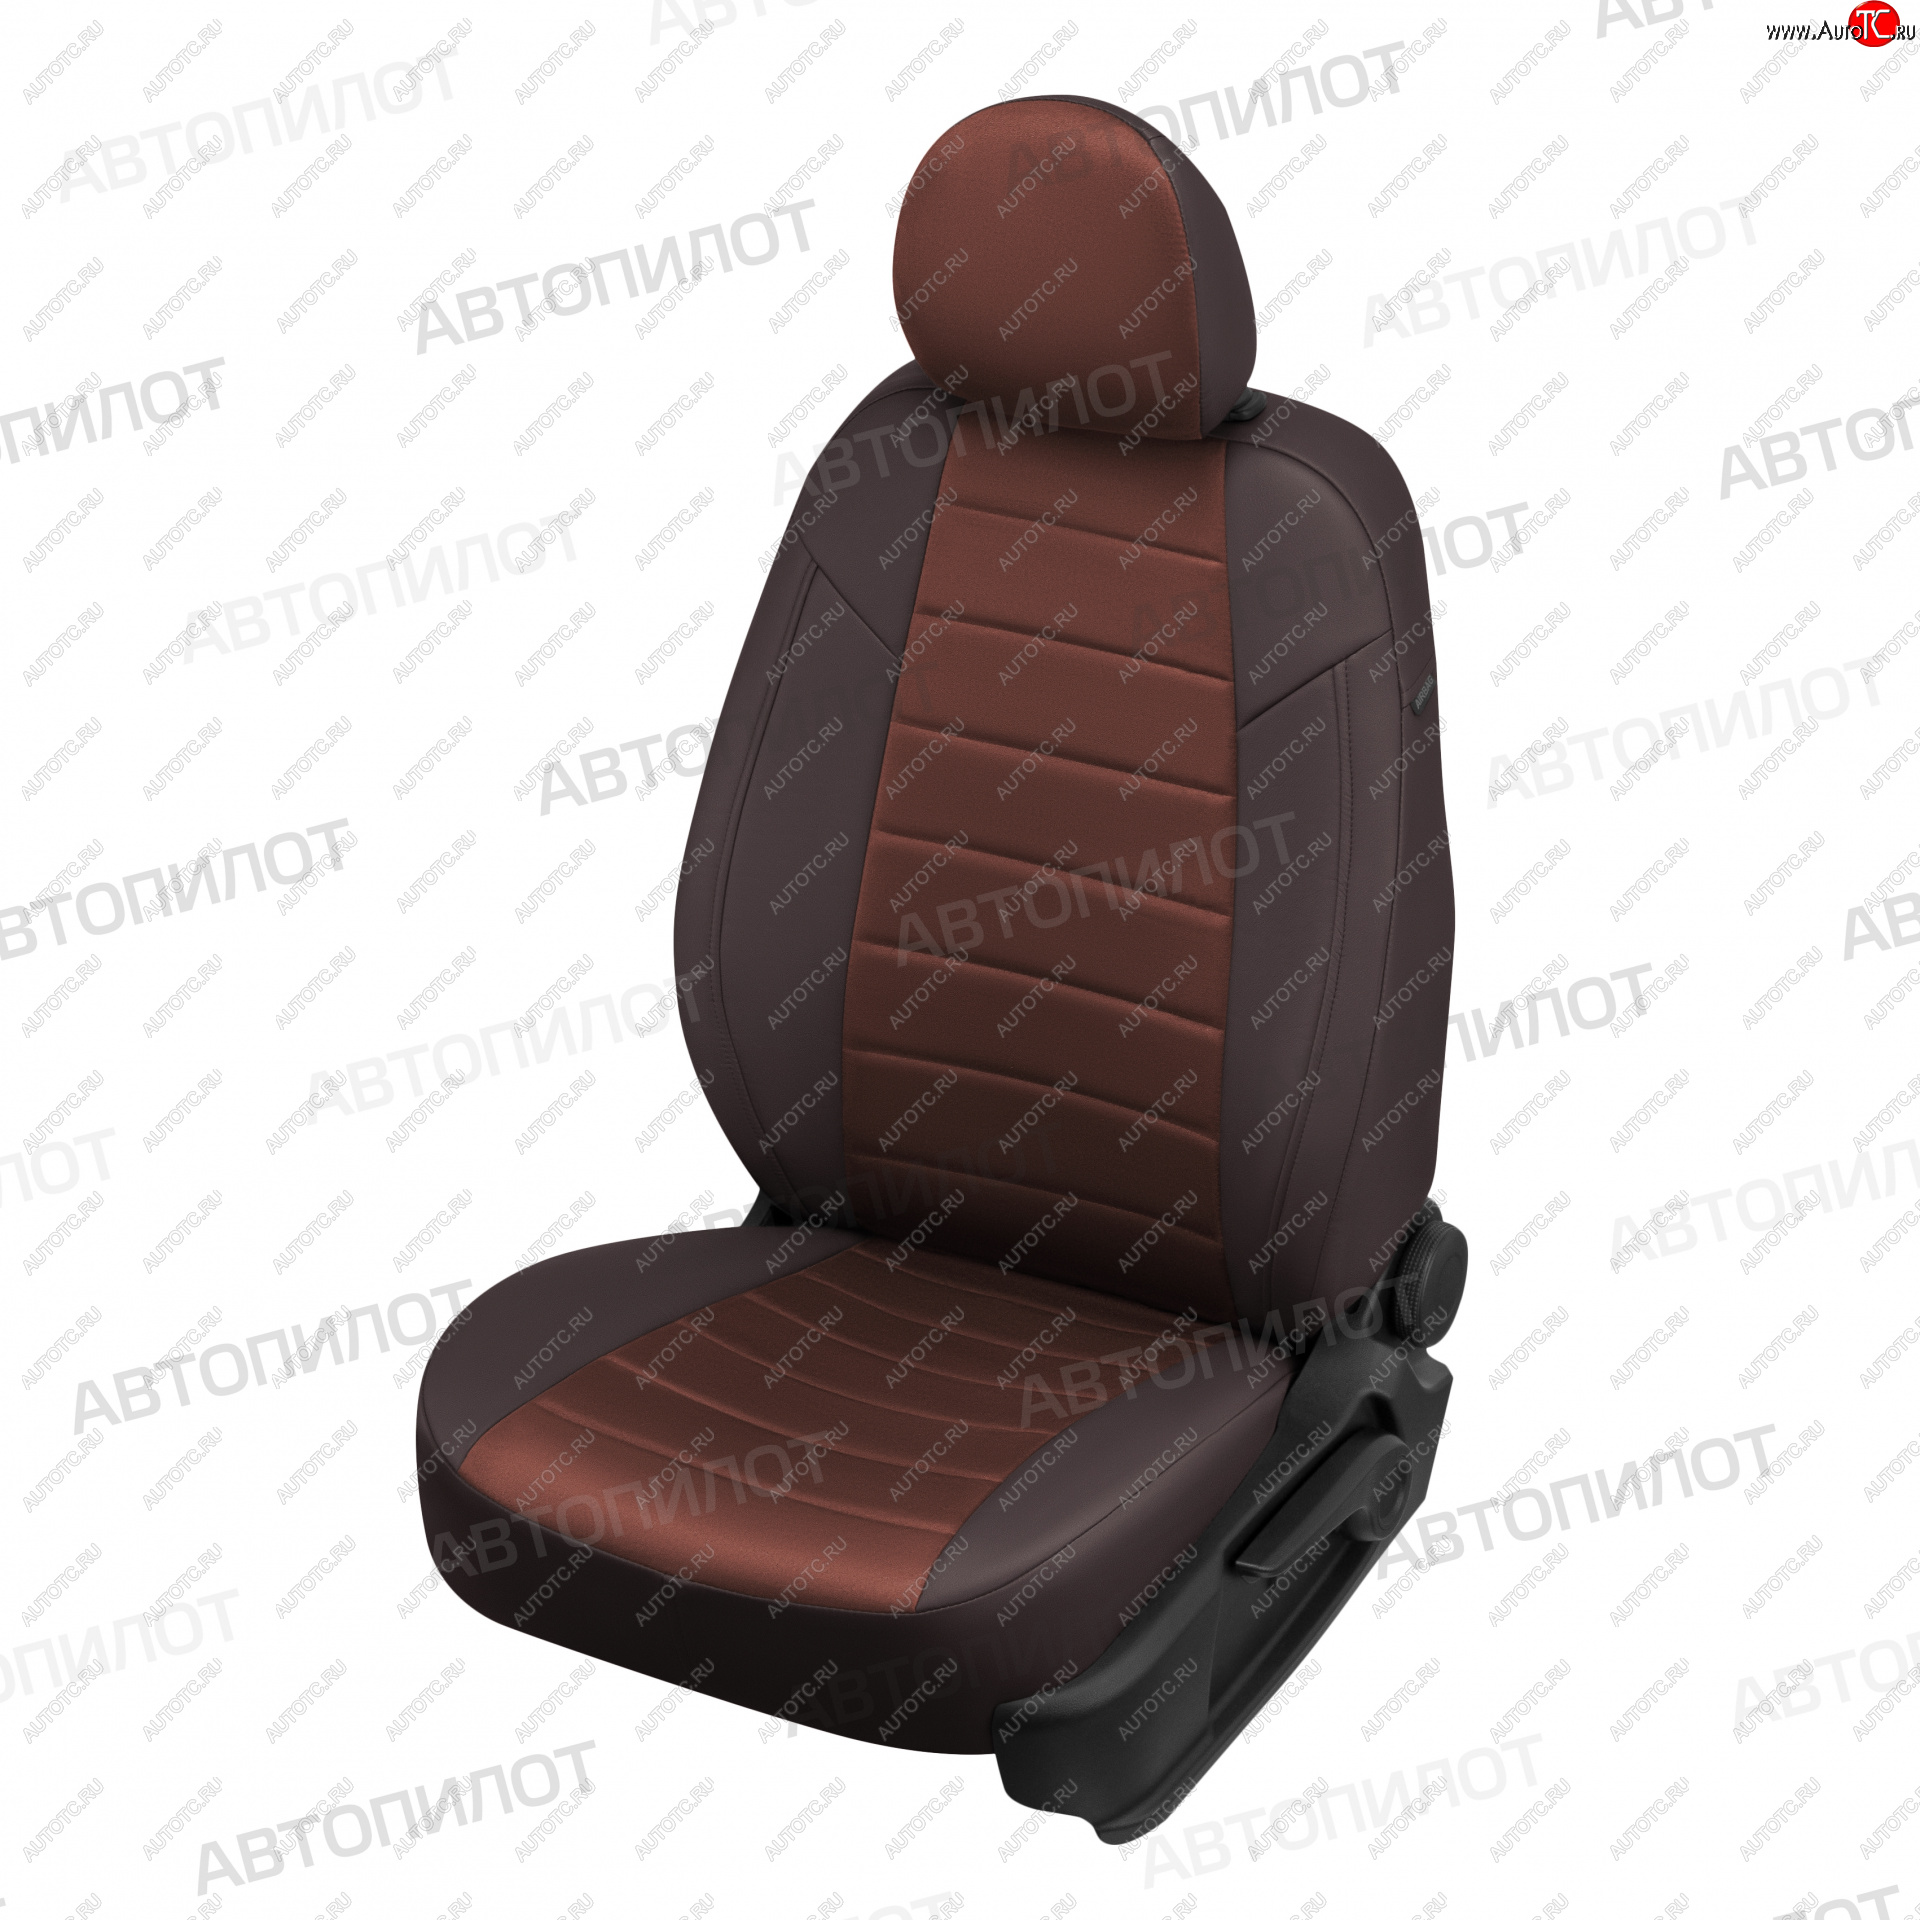 13 449 р. Чехлы сидений (экокожа/алькантара) Автопилот  Honda CR-V  RD1,RD2,RD3 (1995-2001) (шоколад)